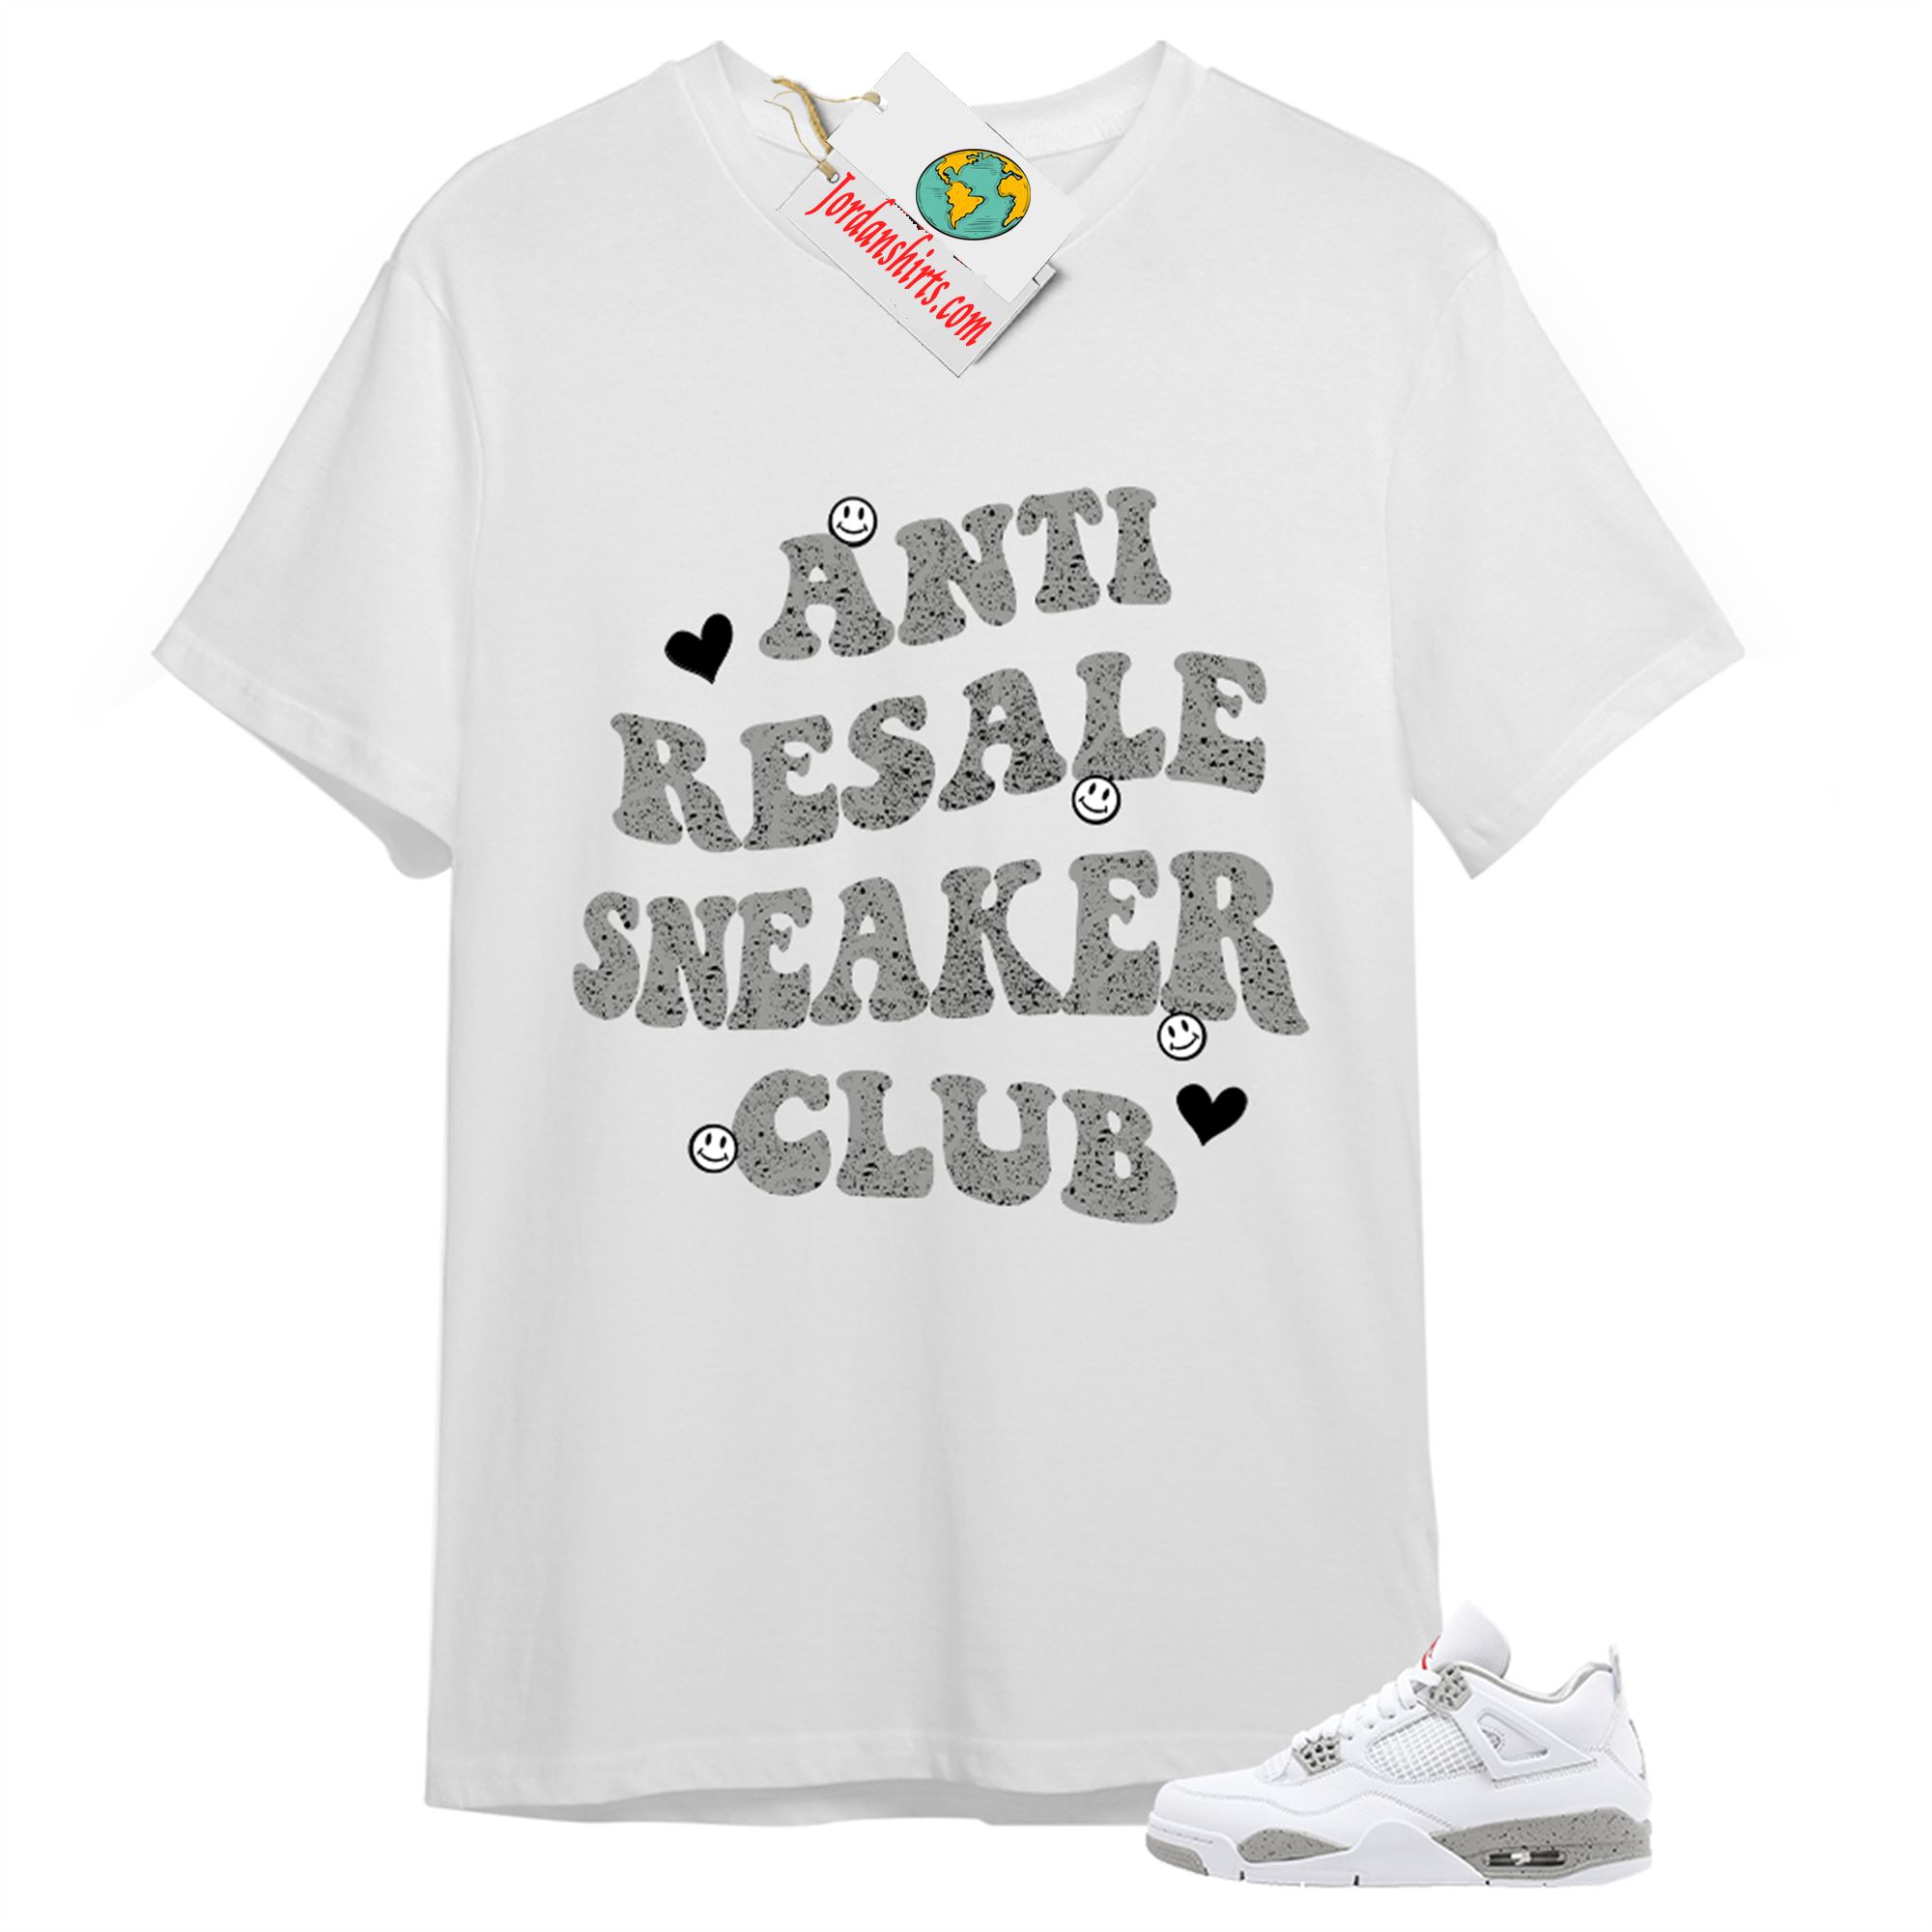 Jordan 4 Shirt, Anti Resale Sneaker Club White T-shirt Air Jordan 4 White Oreo 4s Size Up To 5xl